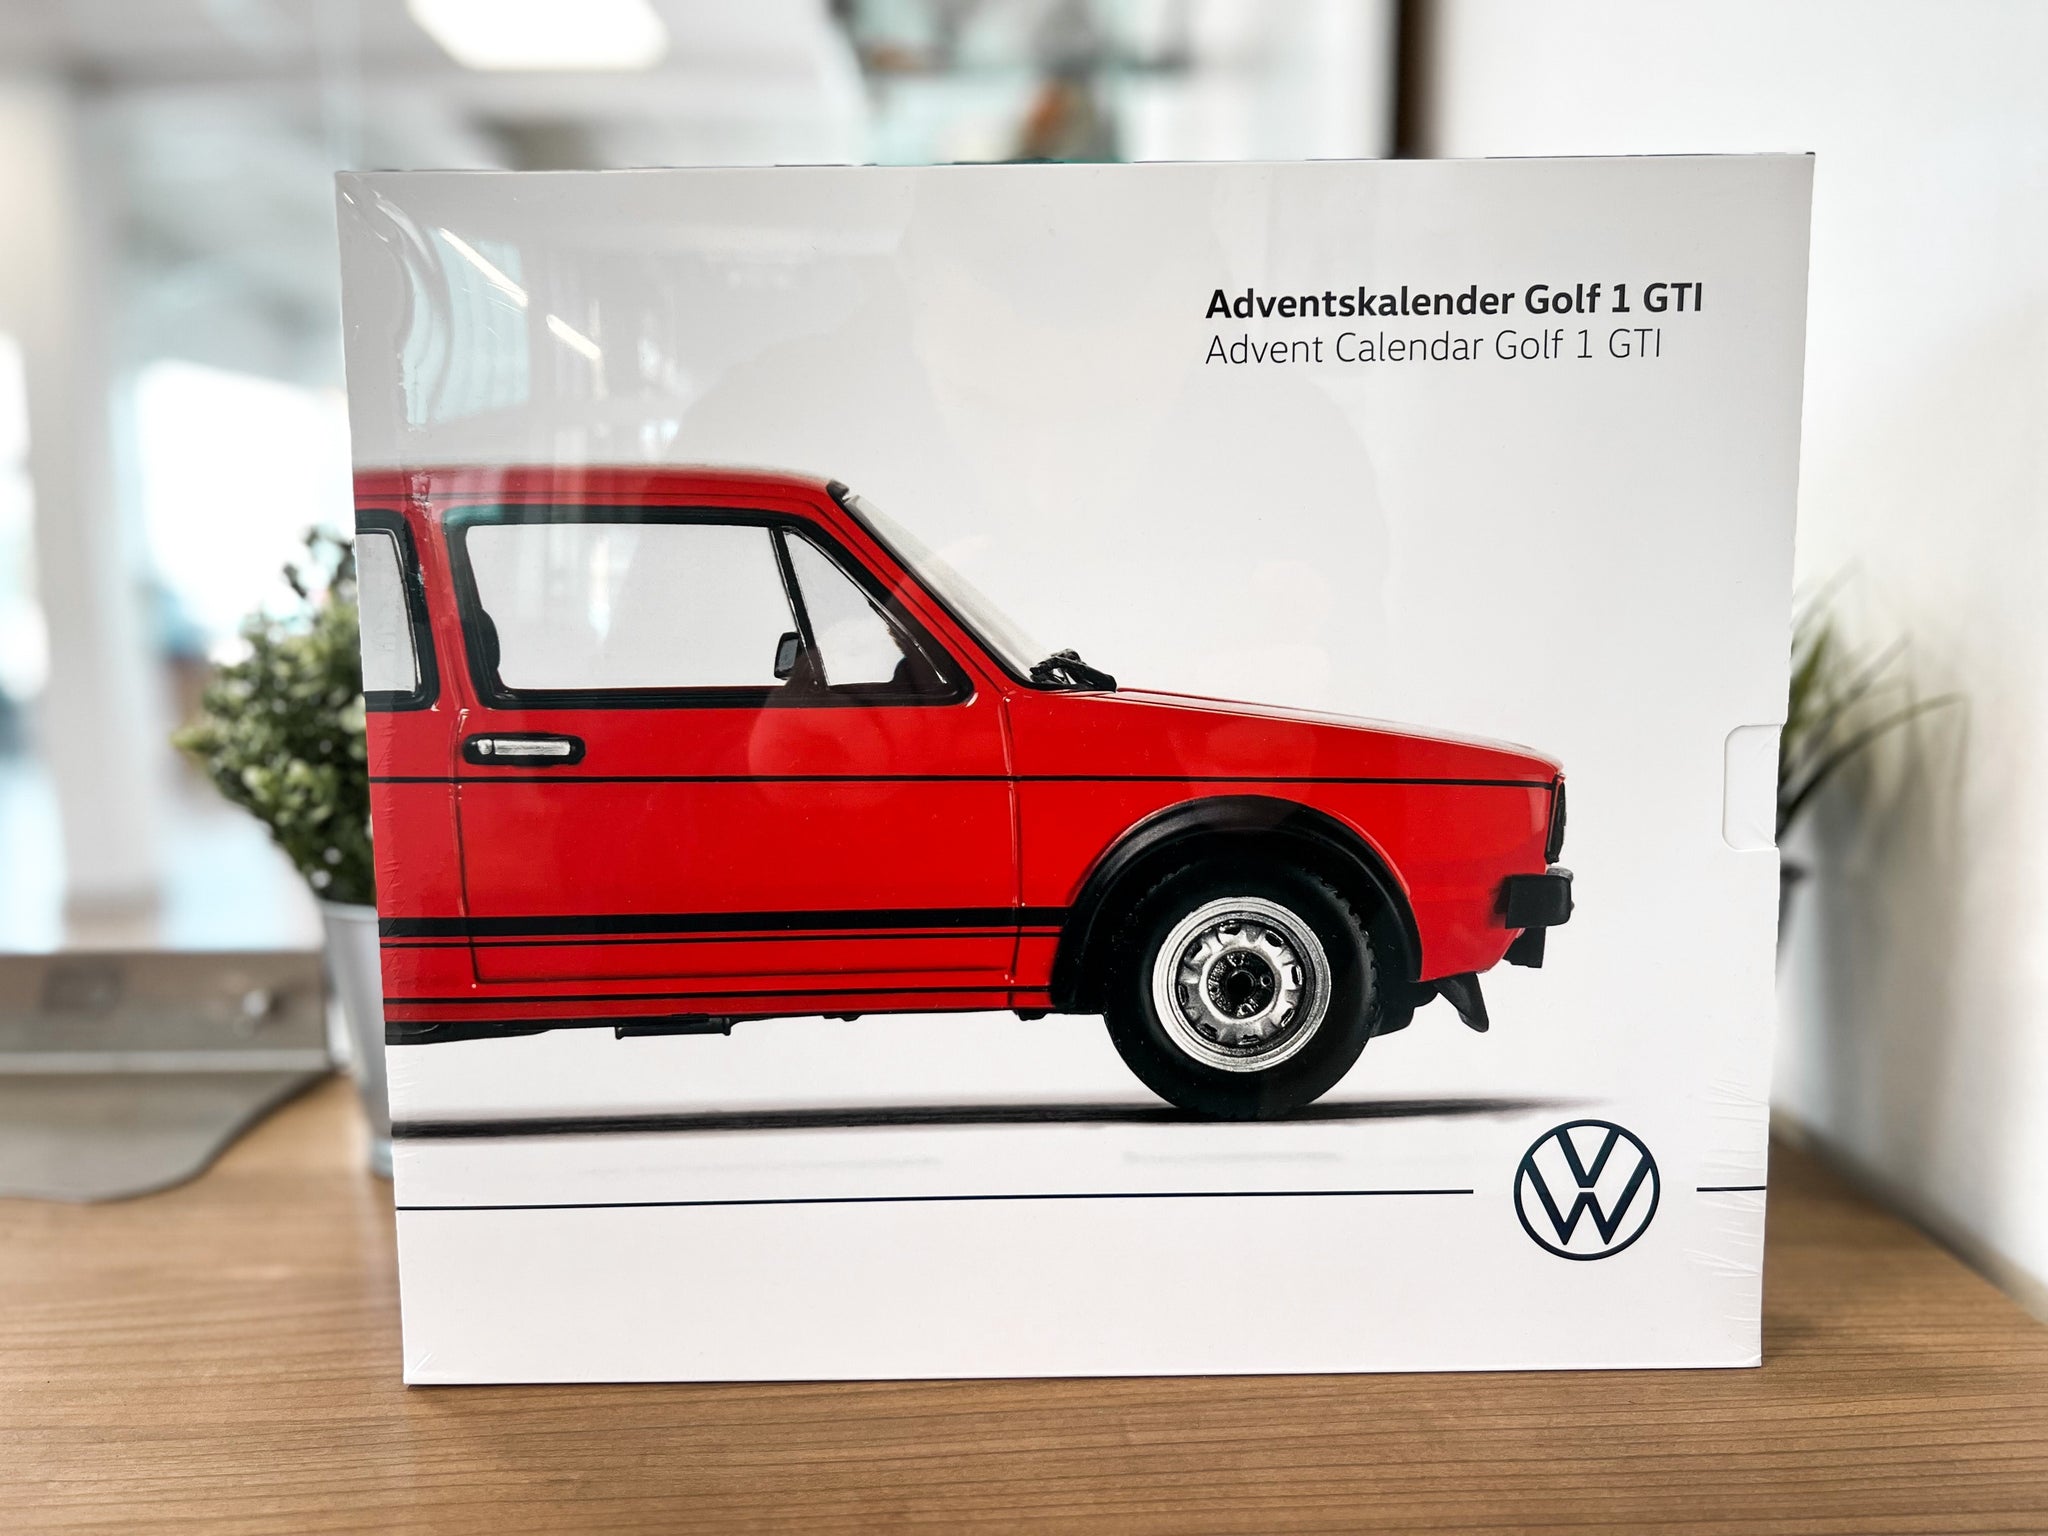 Original VW Adventskalender, Golf 1 GTI, Maßstab 1:43, Farbe rot / 1H2087710